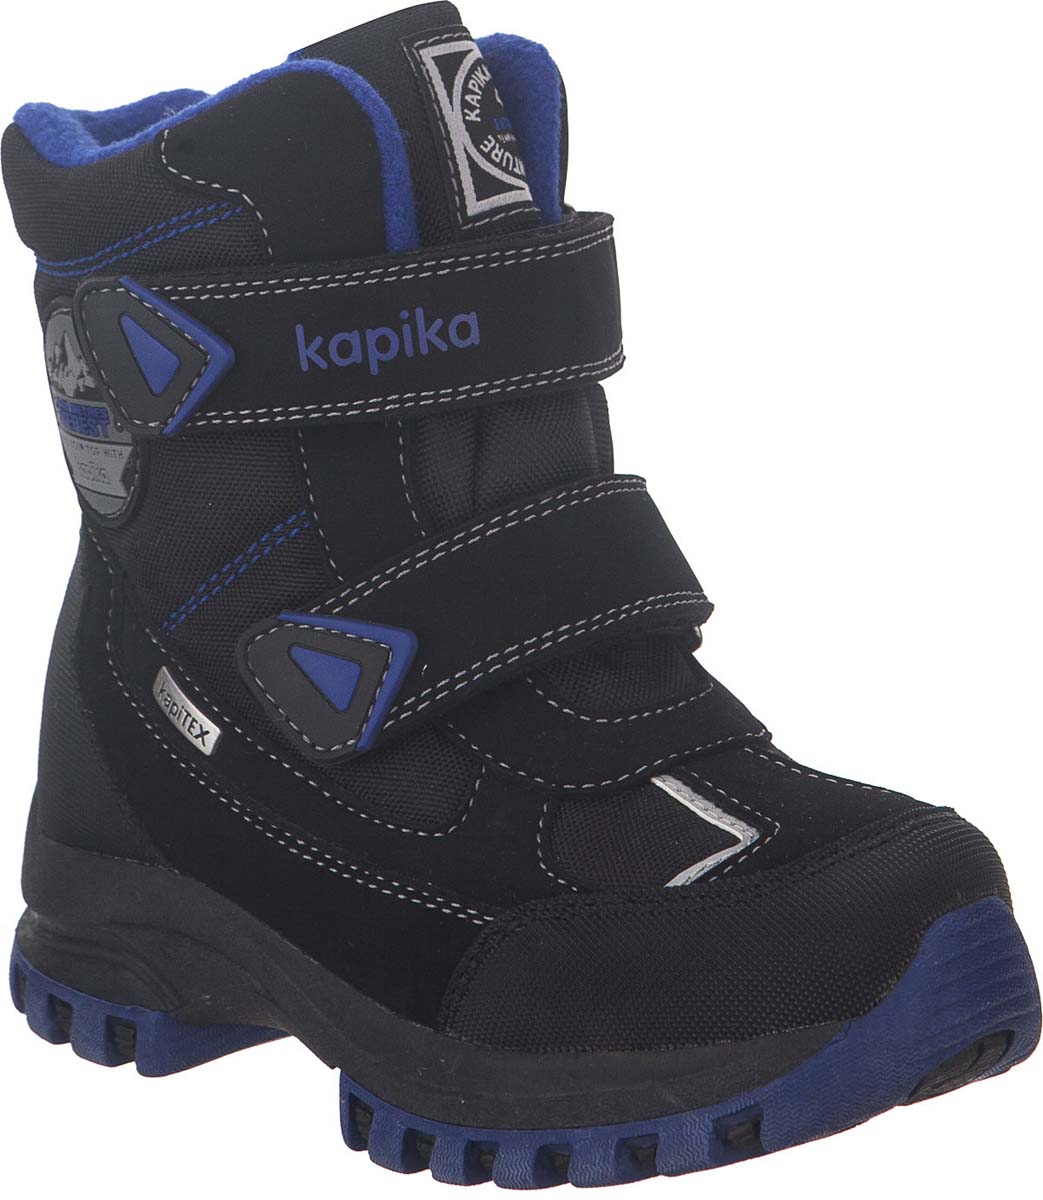 Ботинки для мальчика Kapika KapiTEX, цвет: синий, черный. 42206-1. Размер 32